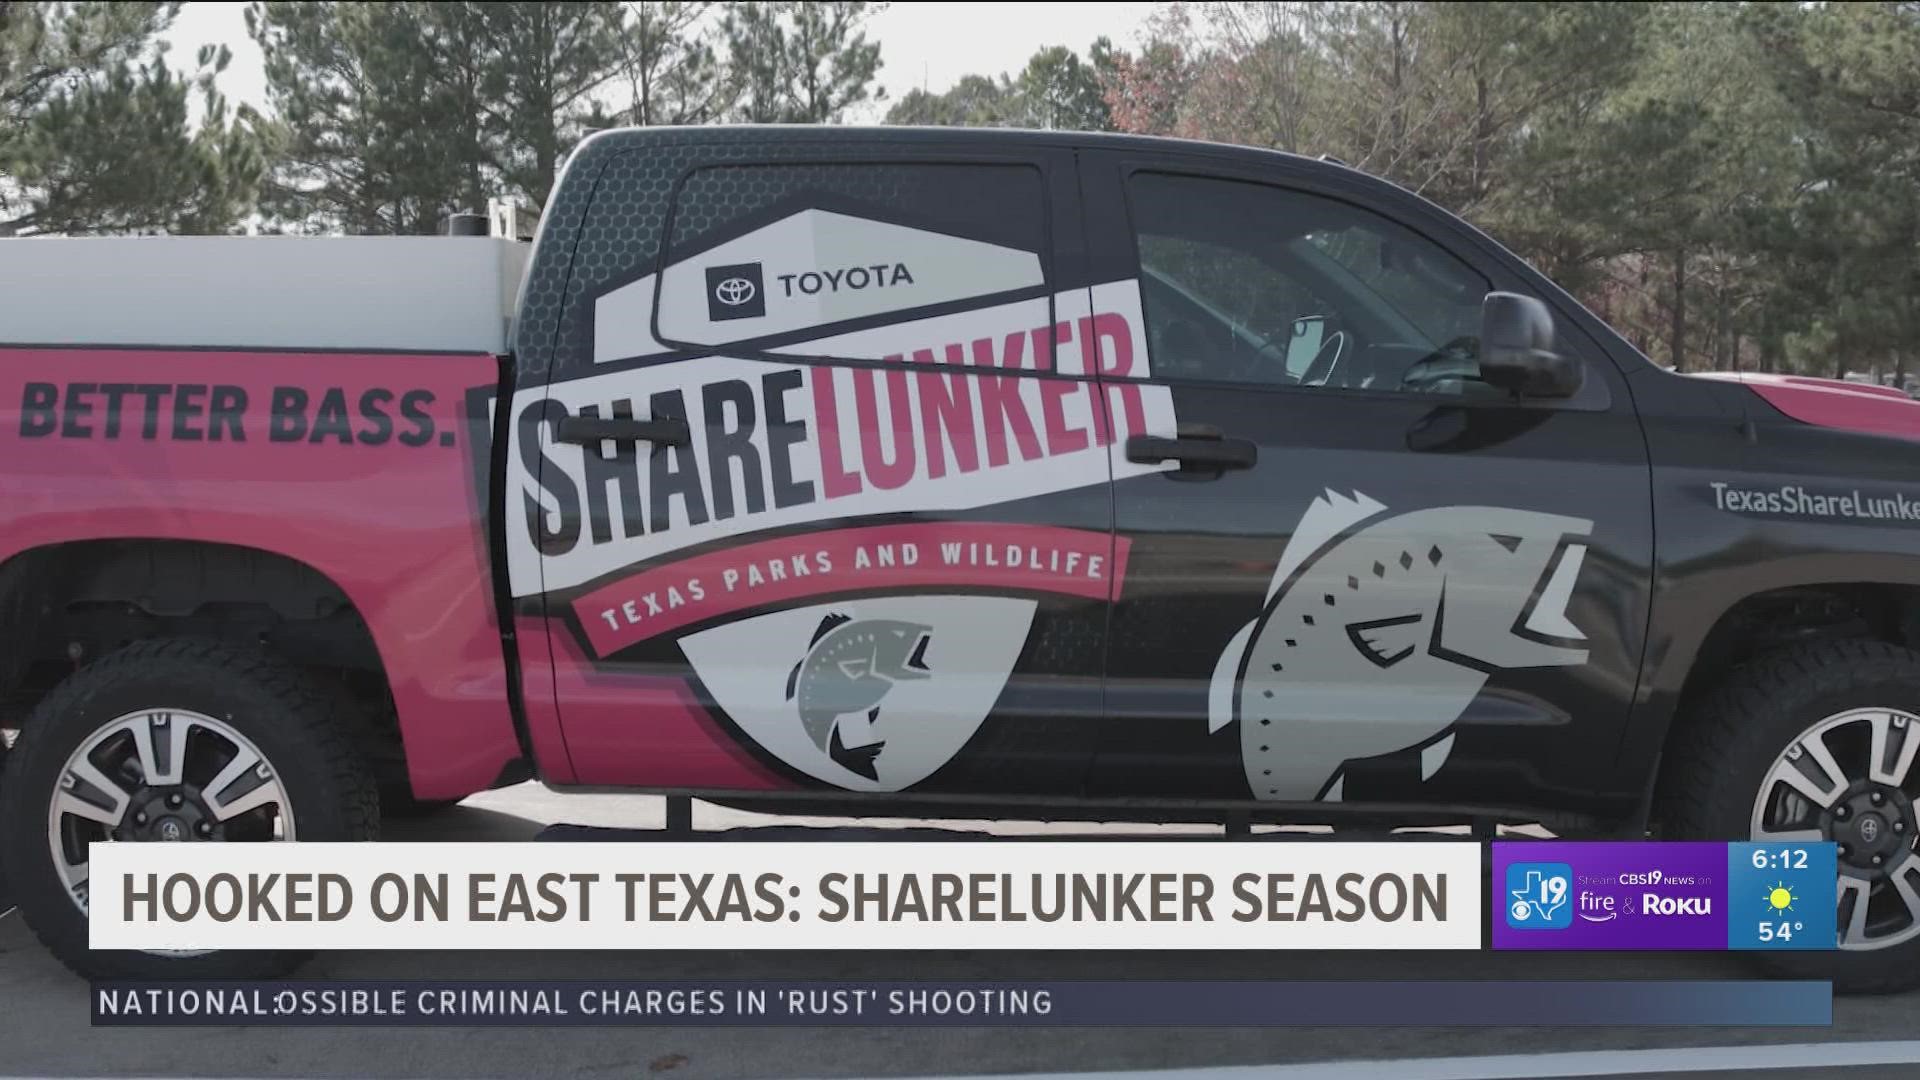 Hooked On East Texas: Sharelunker season is underway